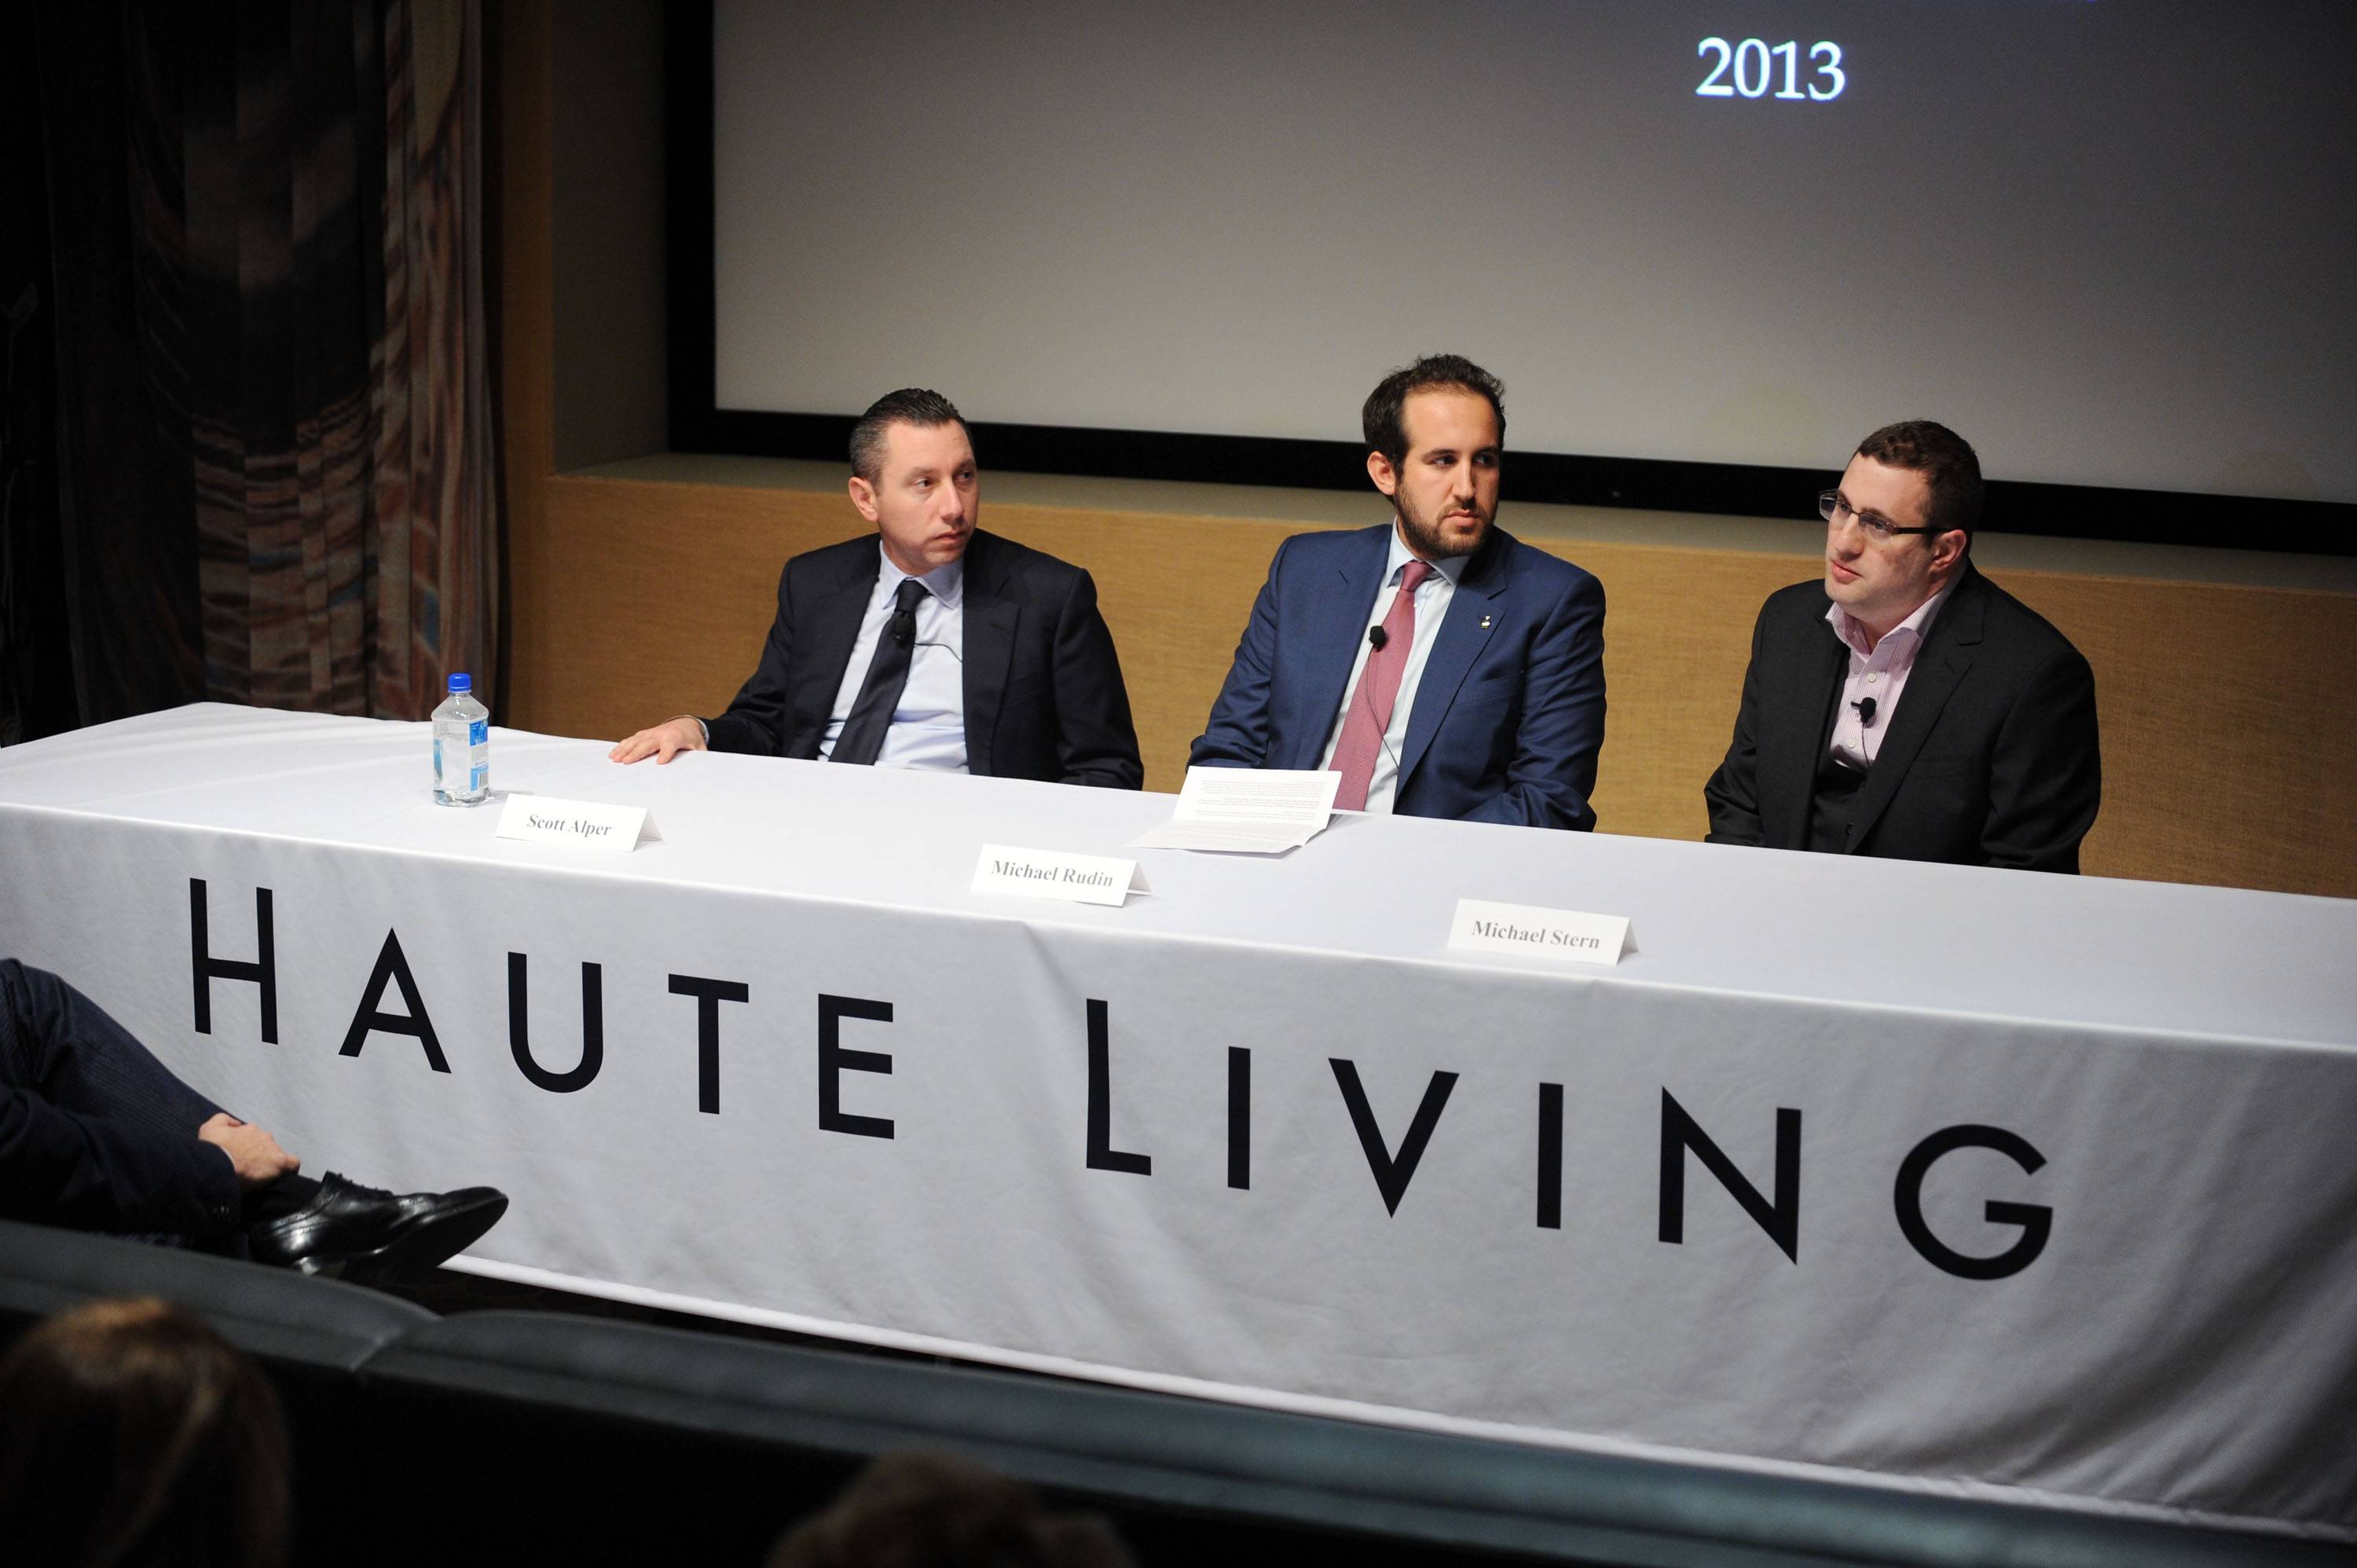 Haute Living New York City Real Estate Summit